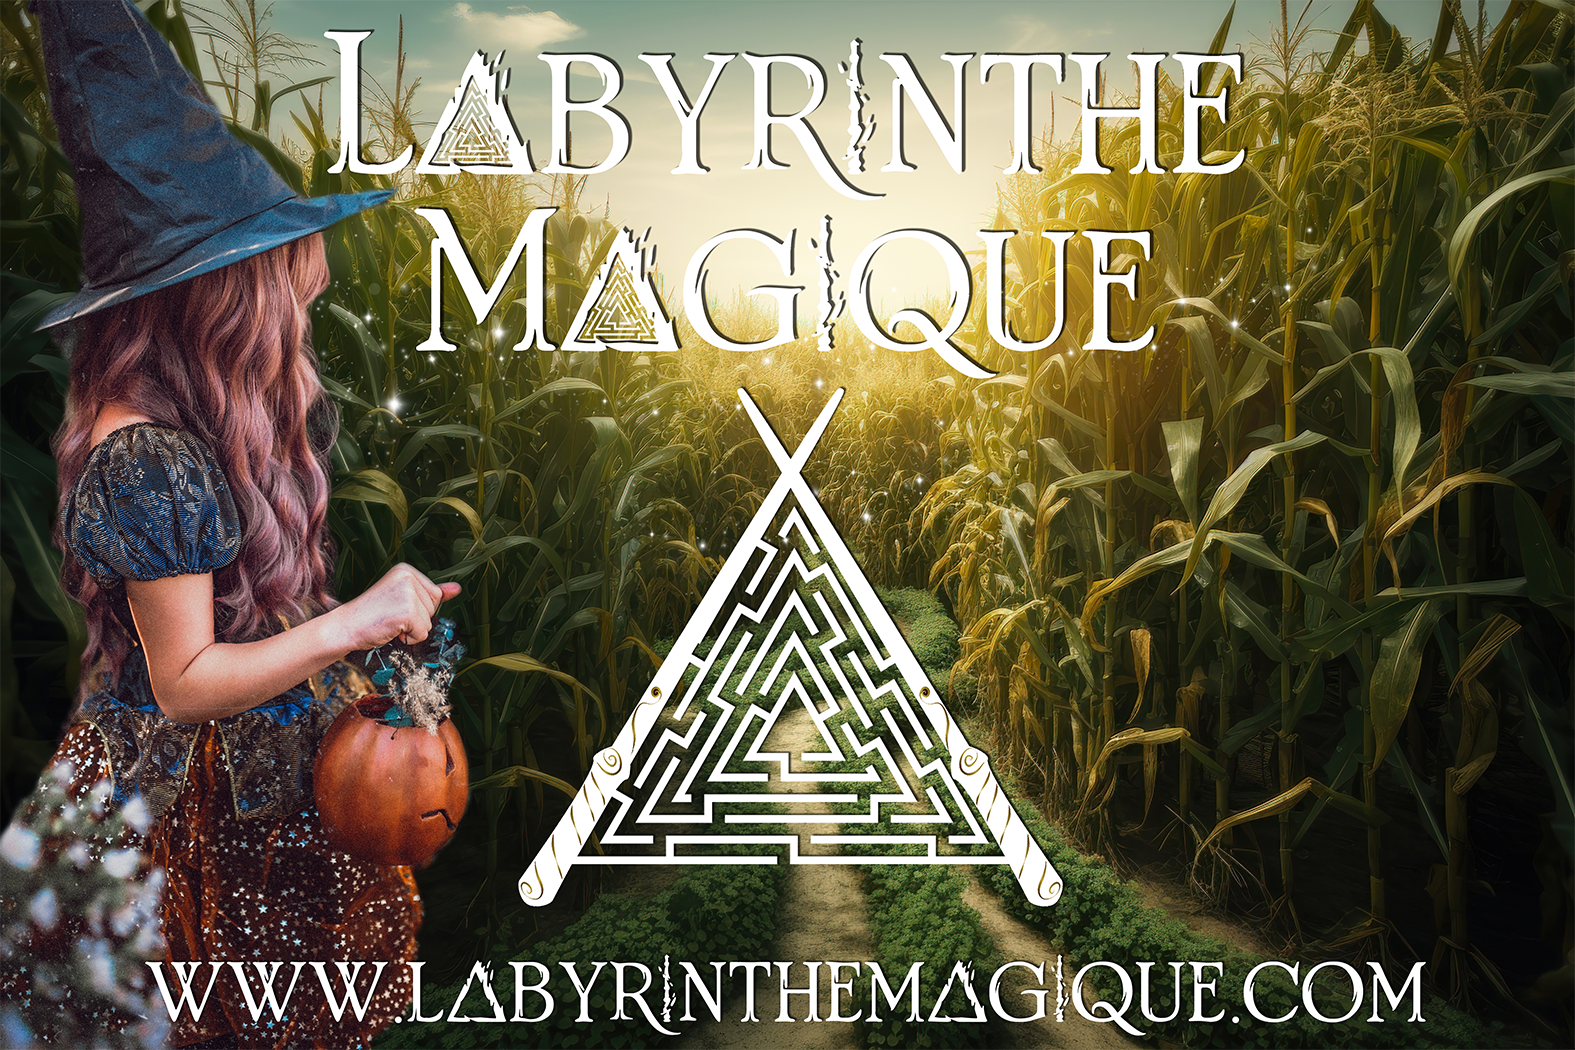 labyrinthe magique.png (3.36 MB)